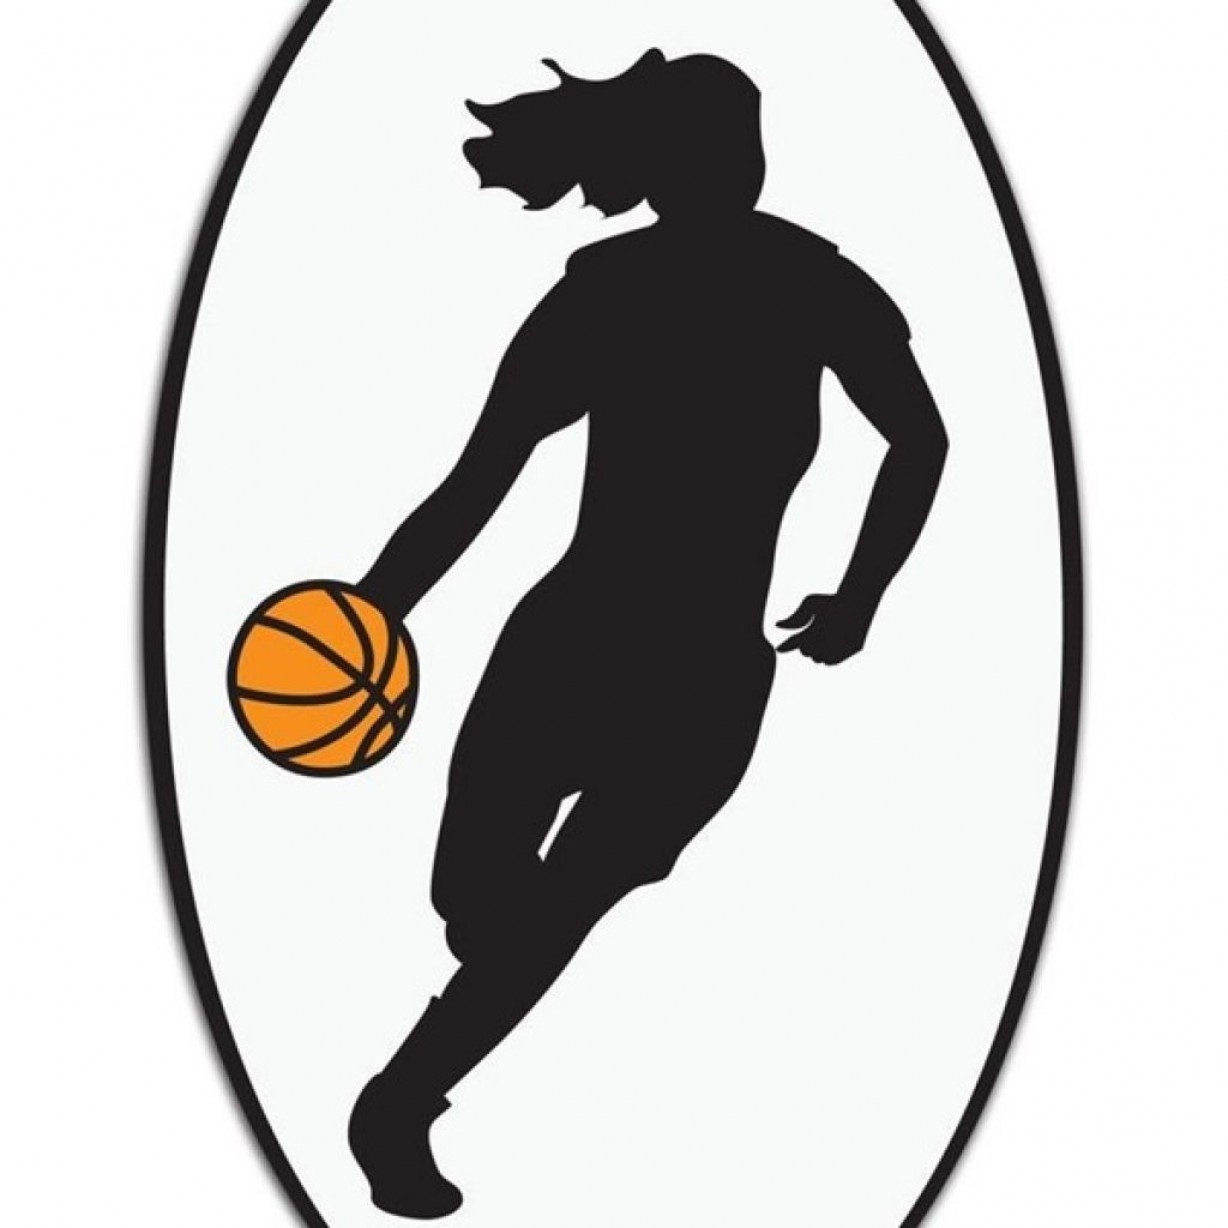 Basketball silhouette vector.